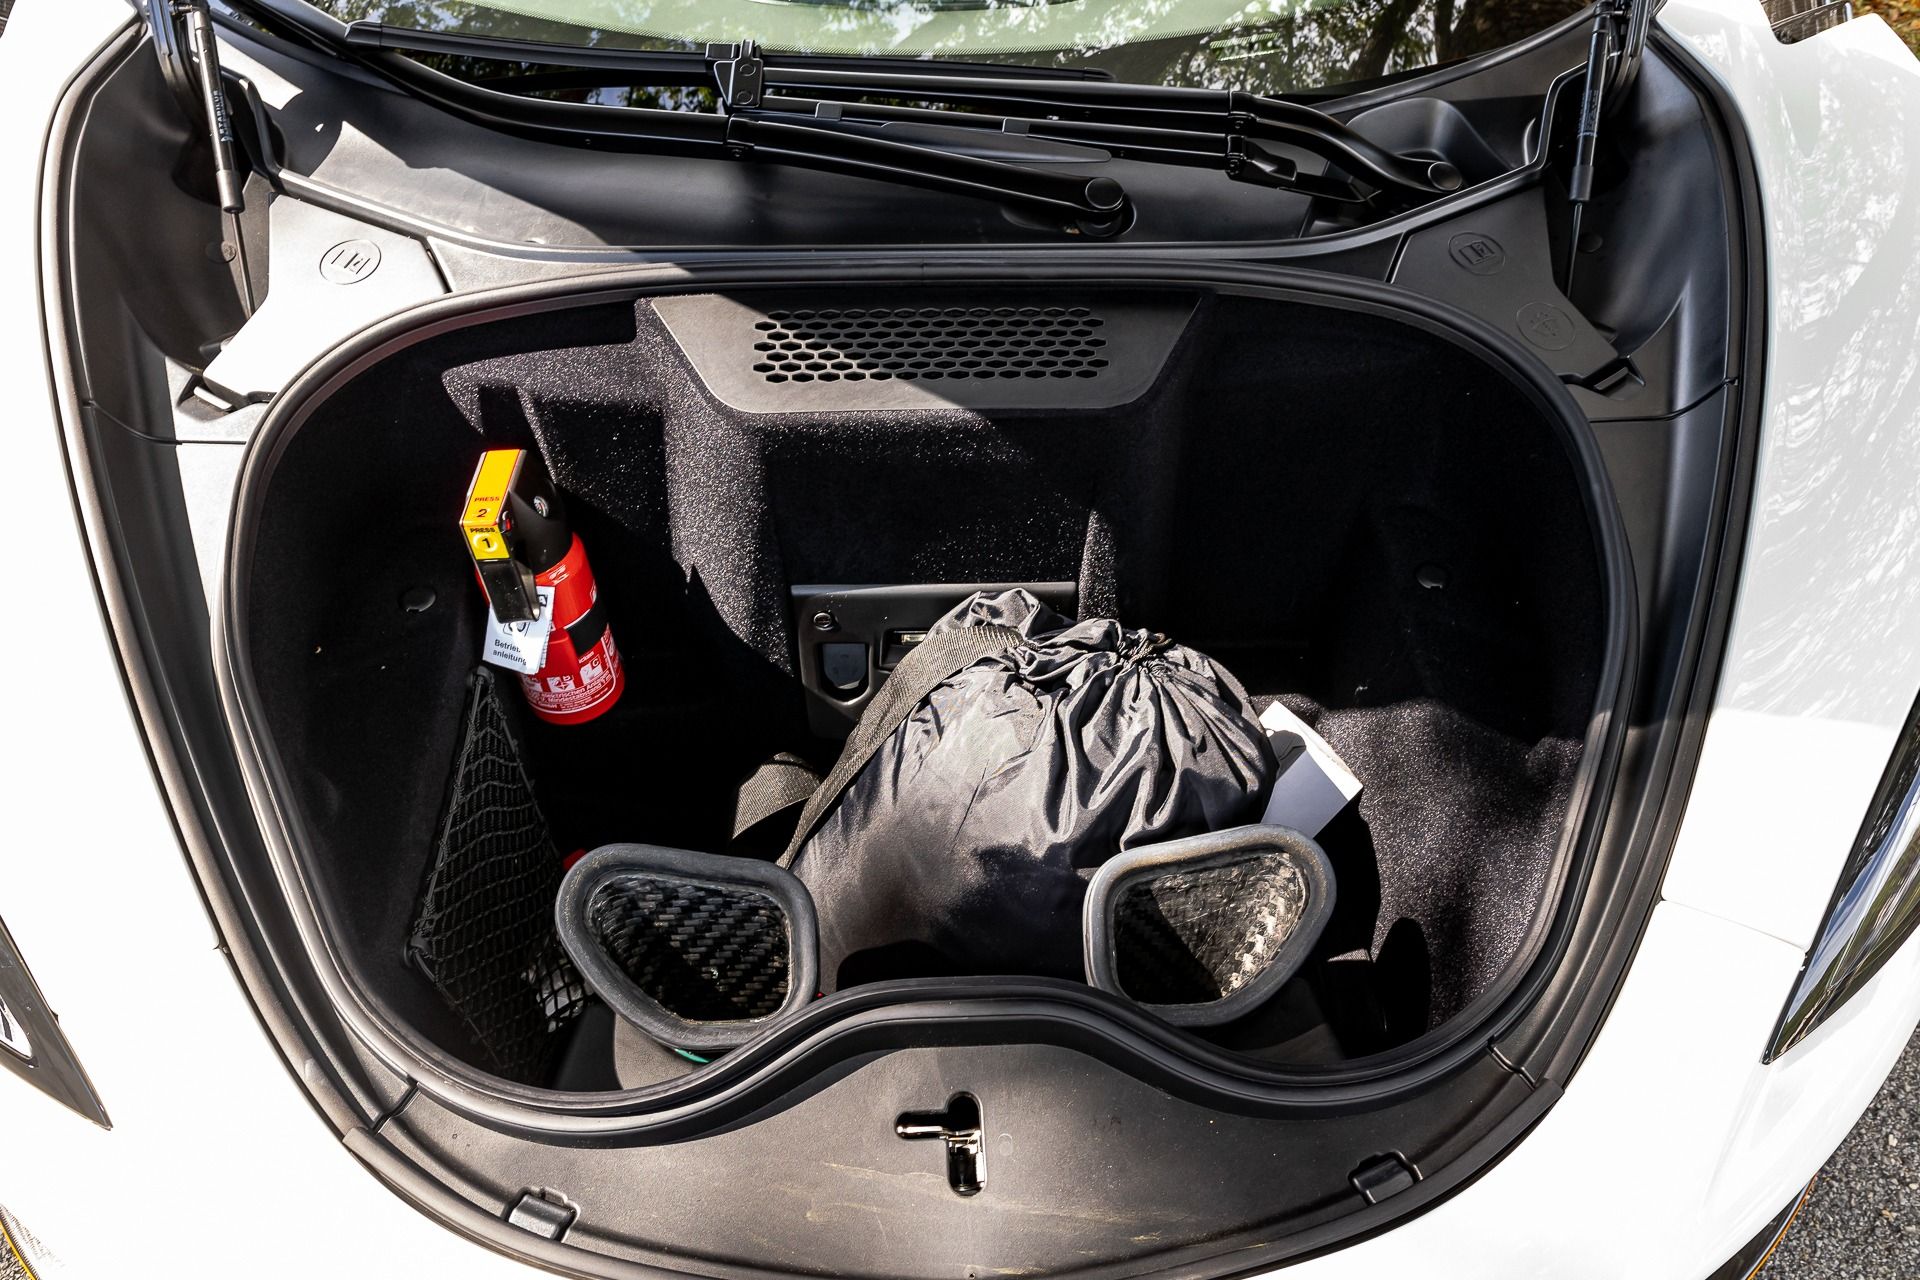 McLaren 765LT luggage compartment Shown